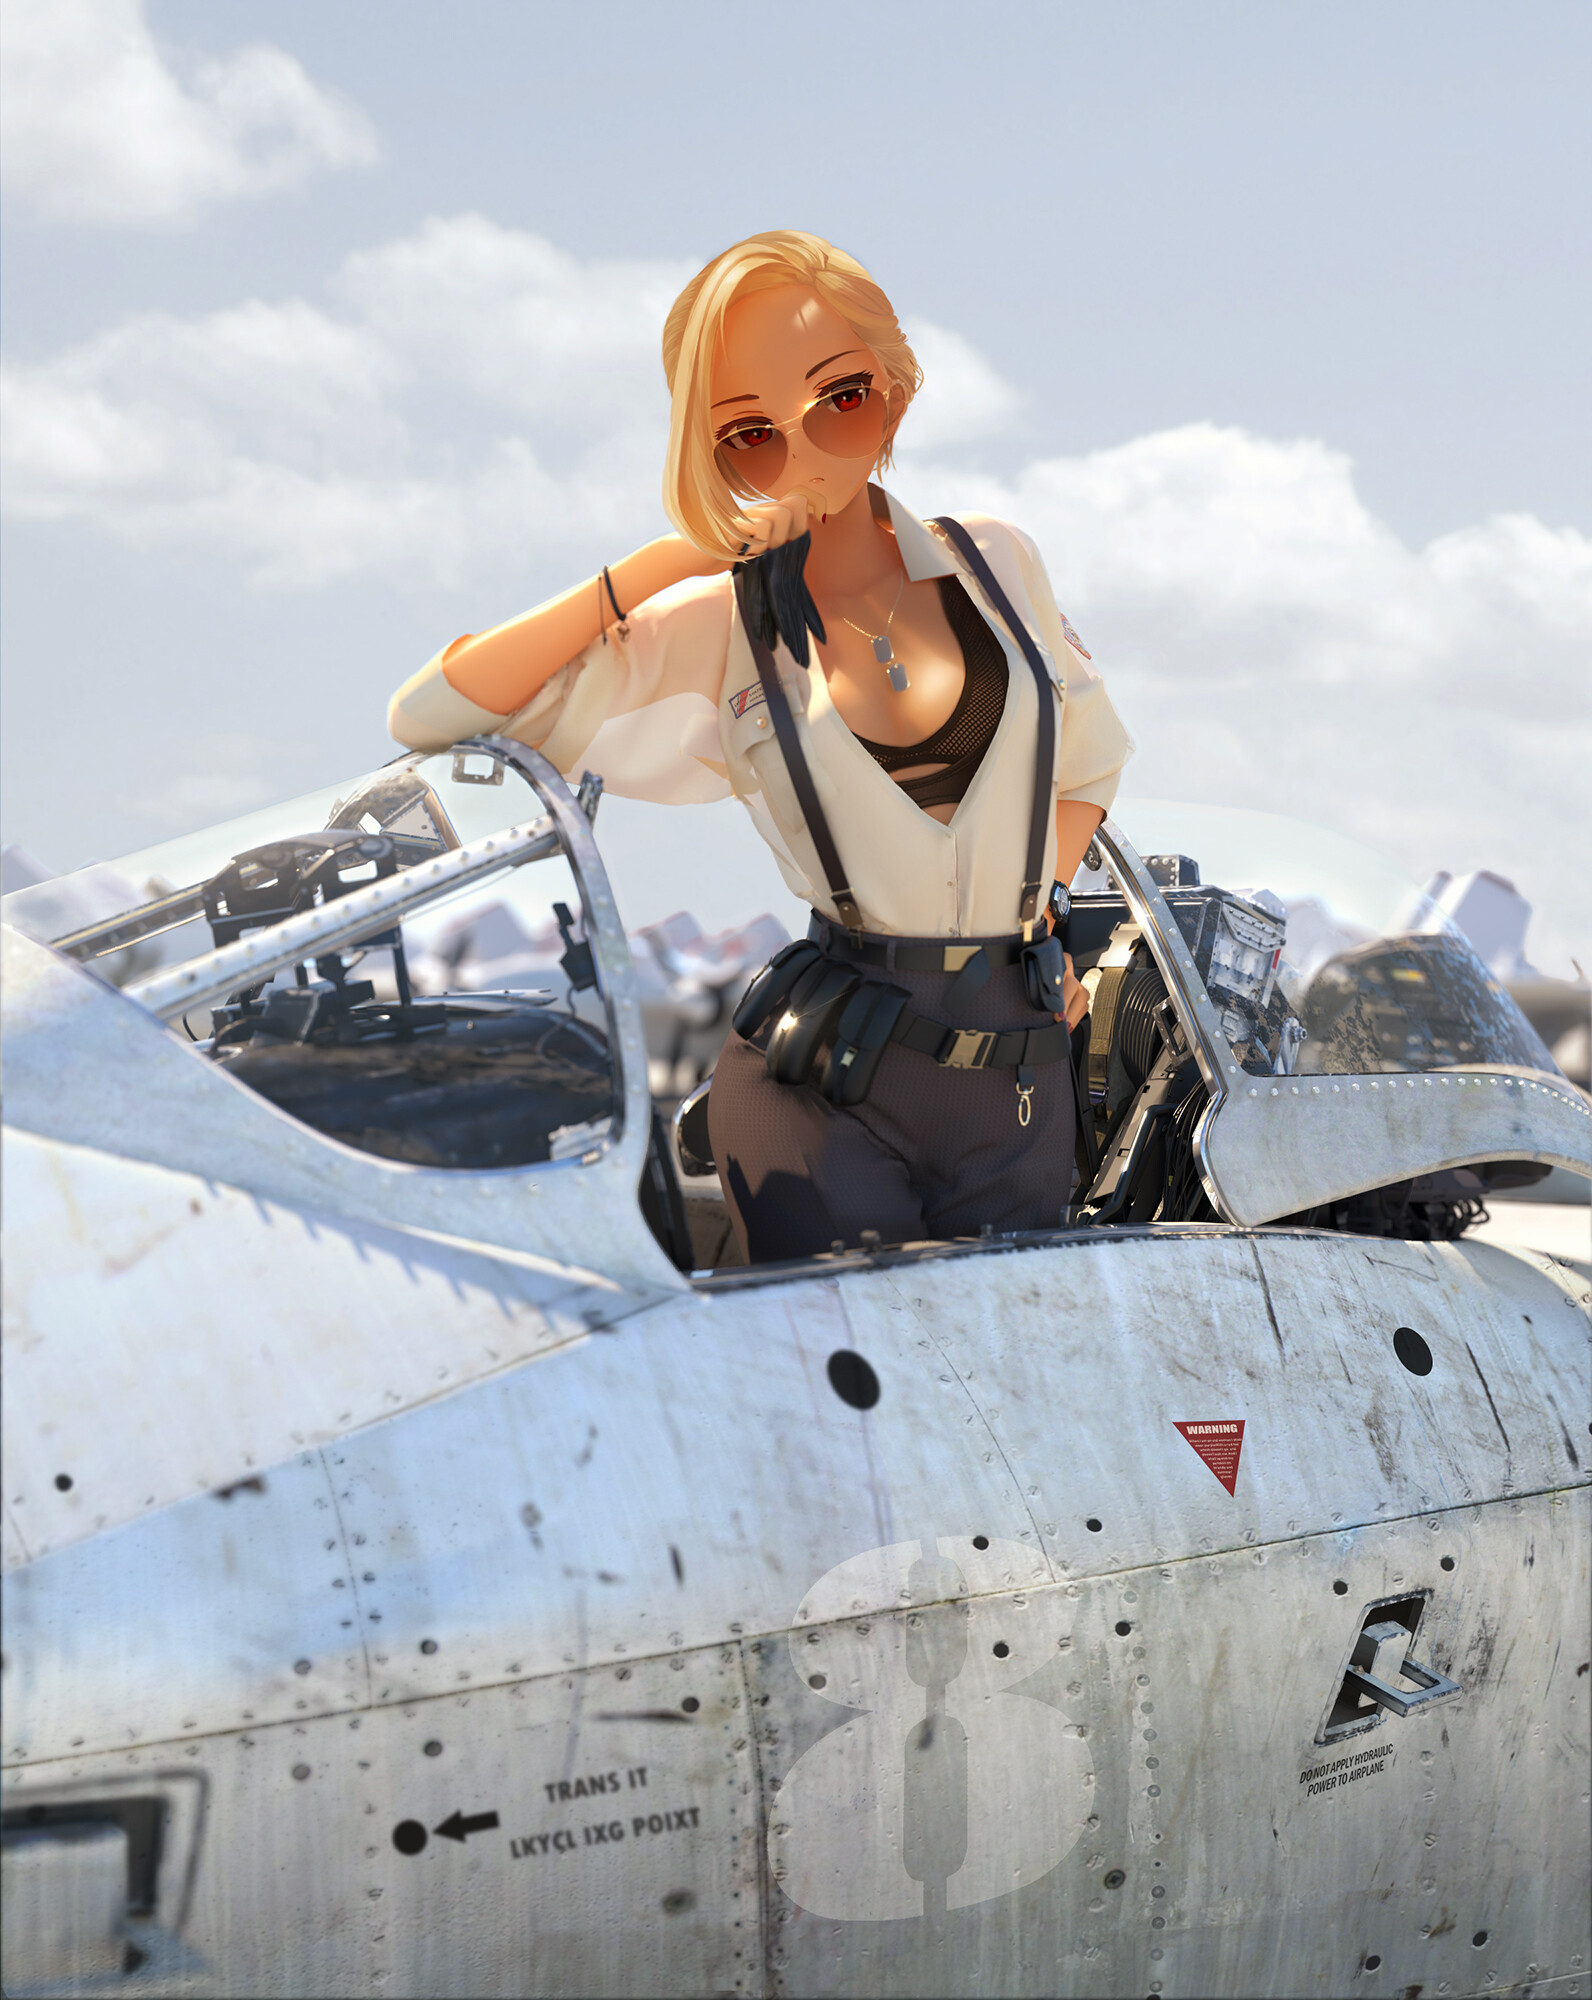 Anime 1592x2000 Nekocha anime anime girls aircraft women with shades sunglasses blonde military aircraft vehicle